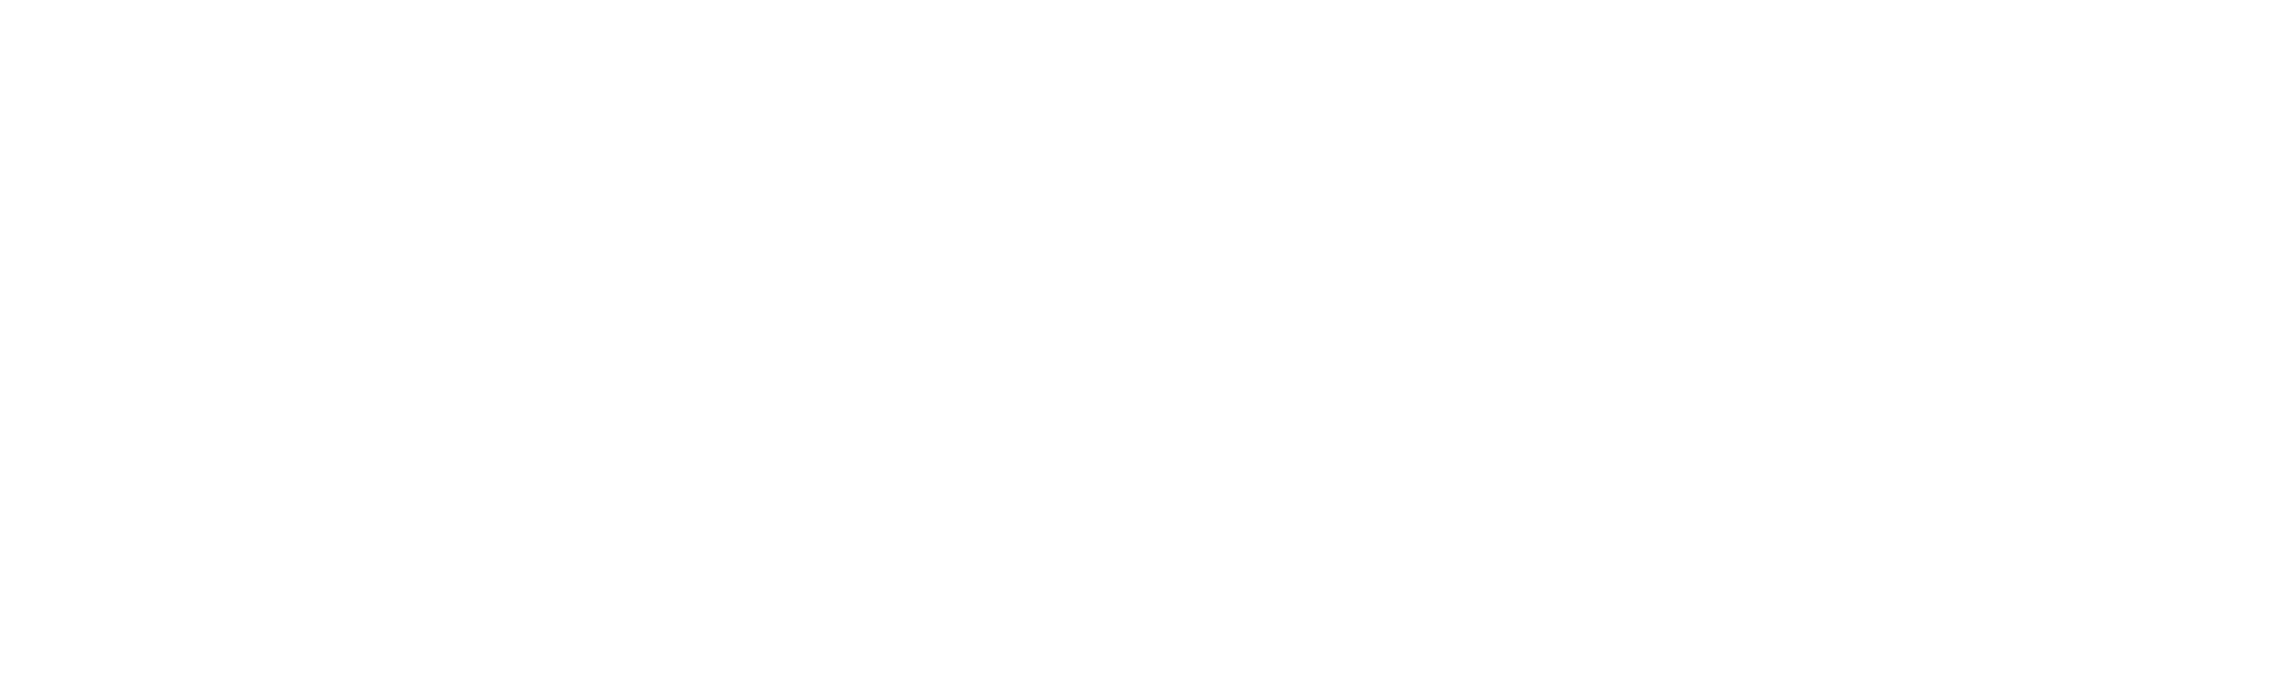 296-krka-logo-black-and-white-16826358964456.png